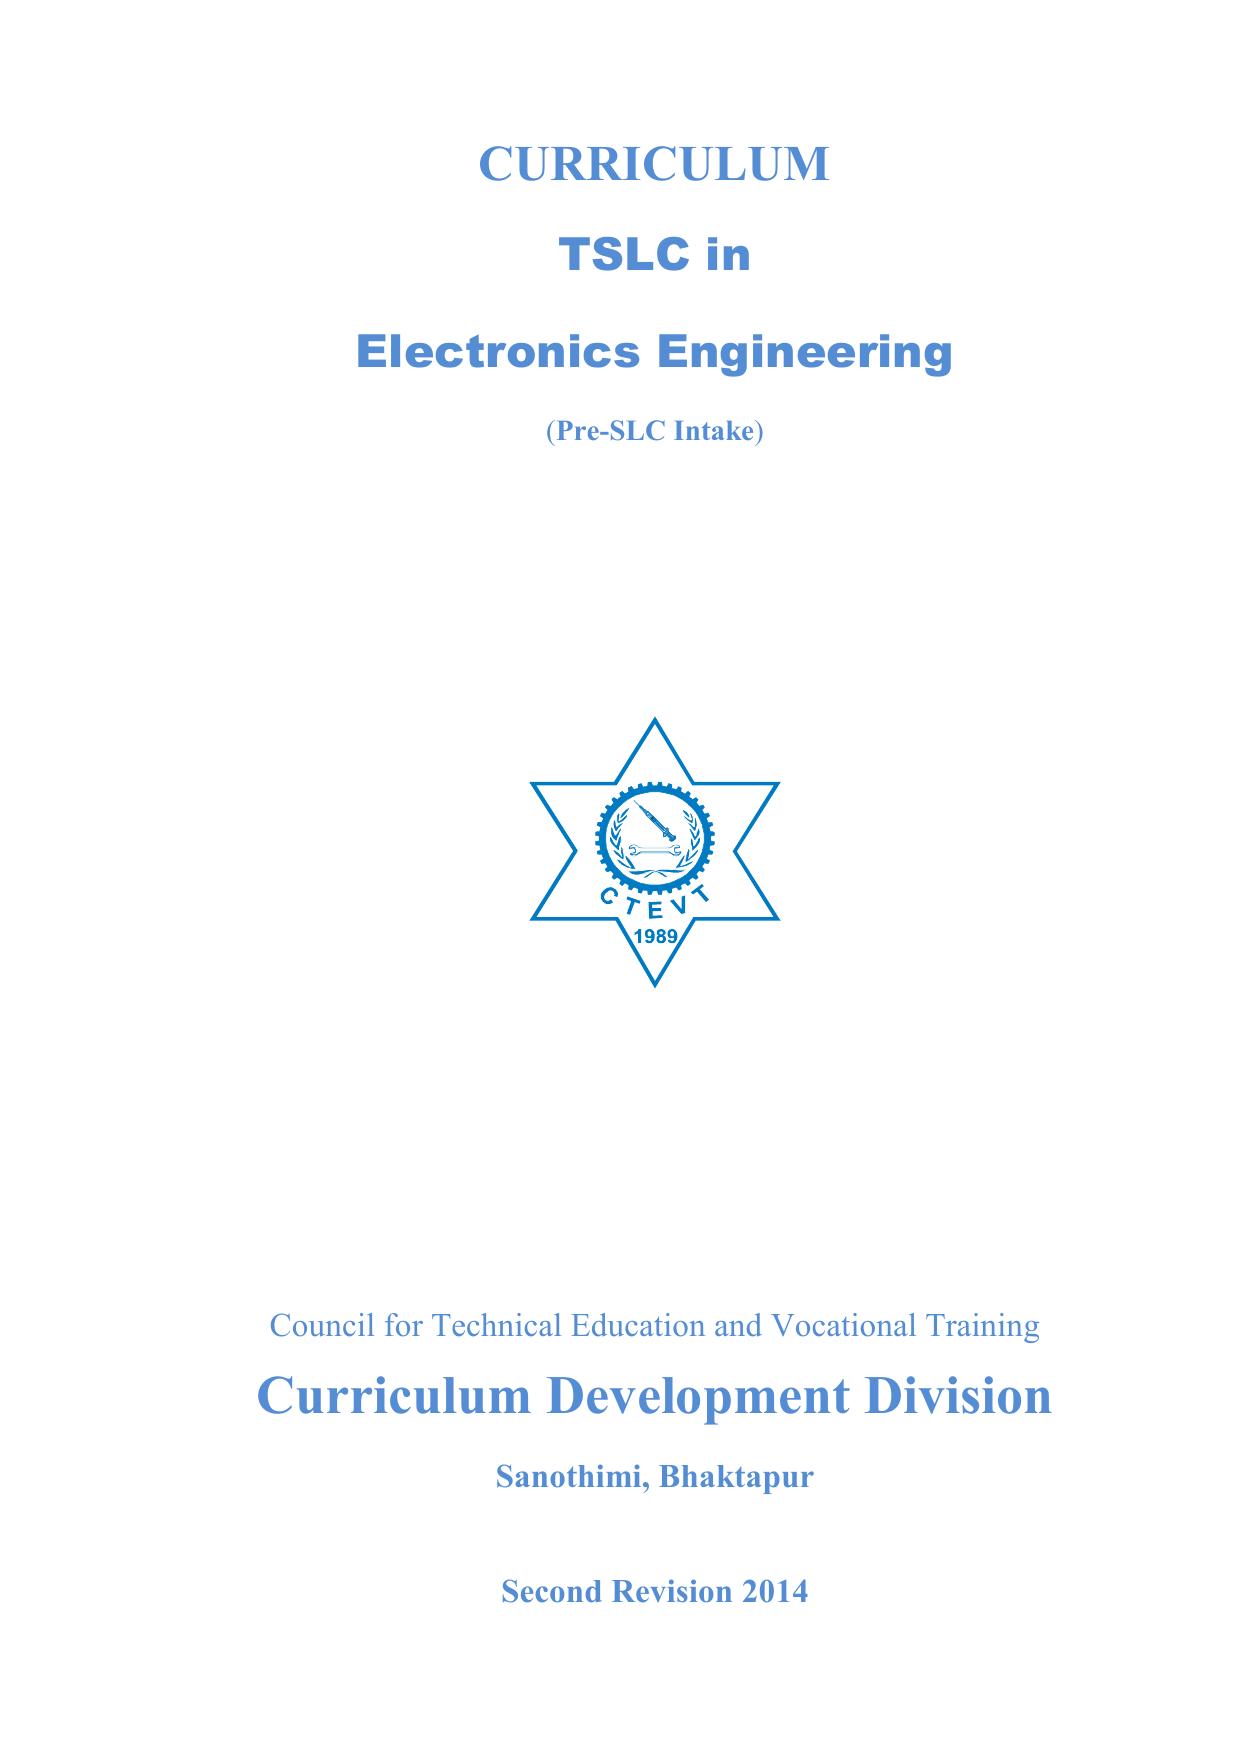 TSLC in Electronics Engineering pre SLC, 2014